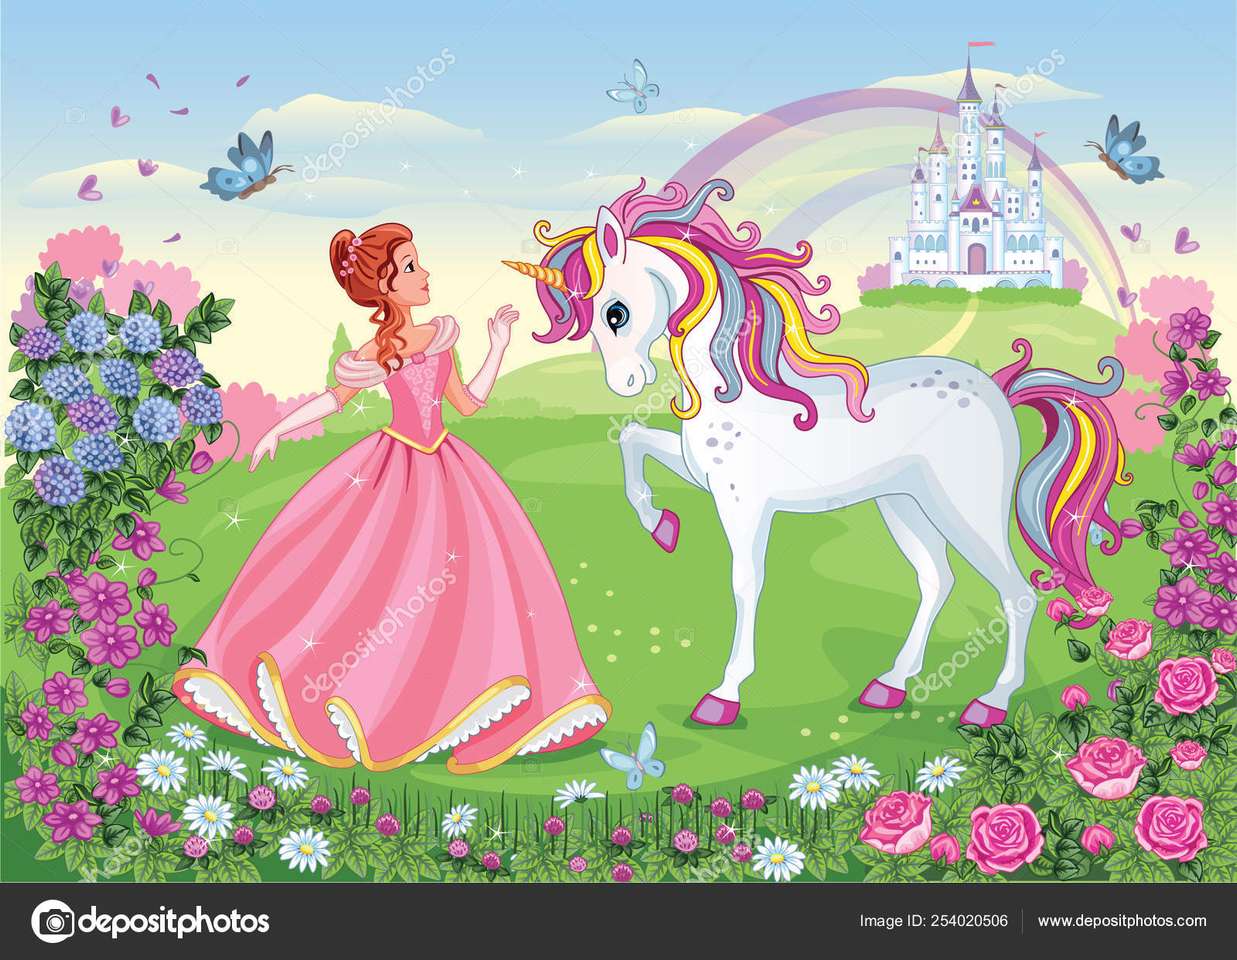 Barbie and the magic of Pegasus online puzzle